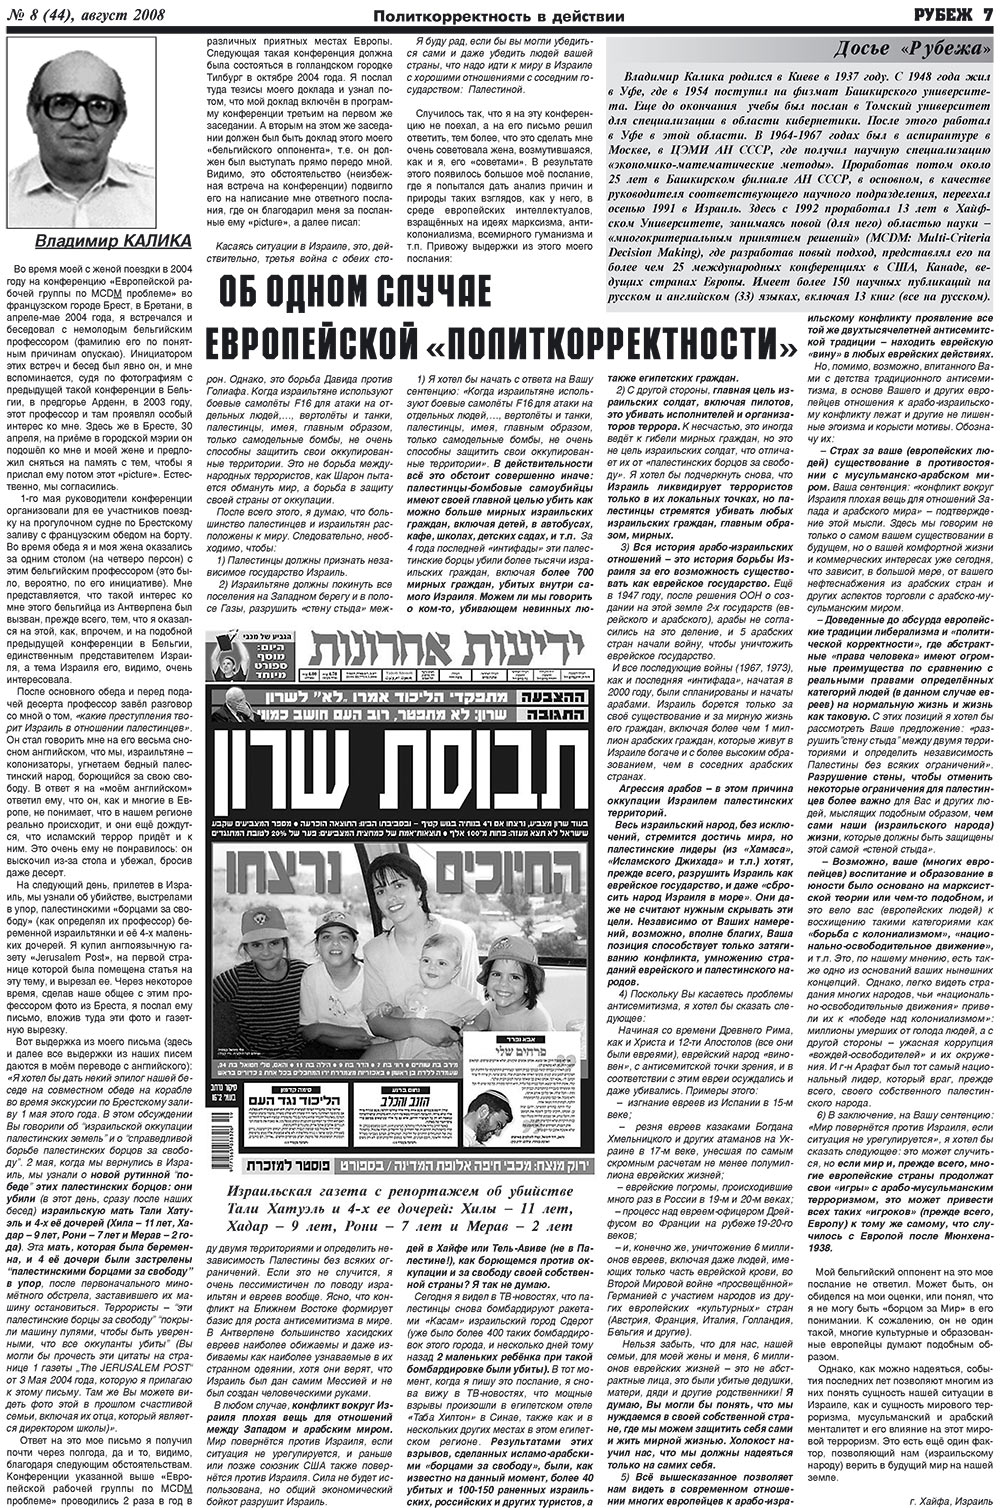 Рубеж, газета. 2008 №8 стр.7